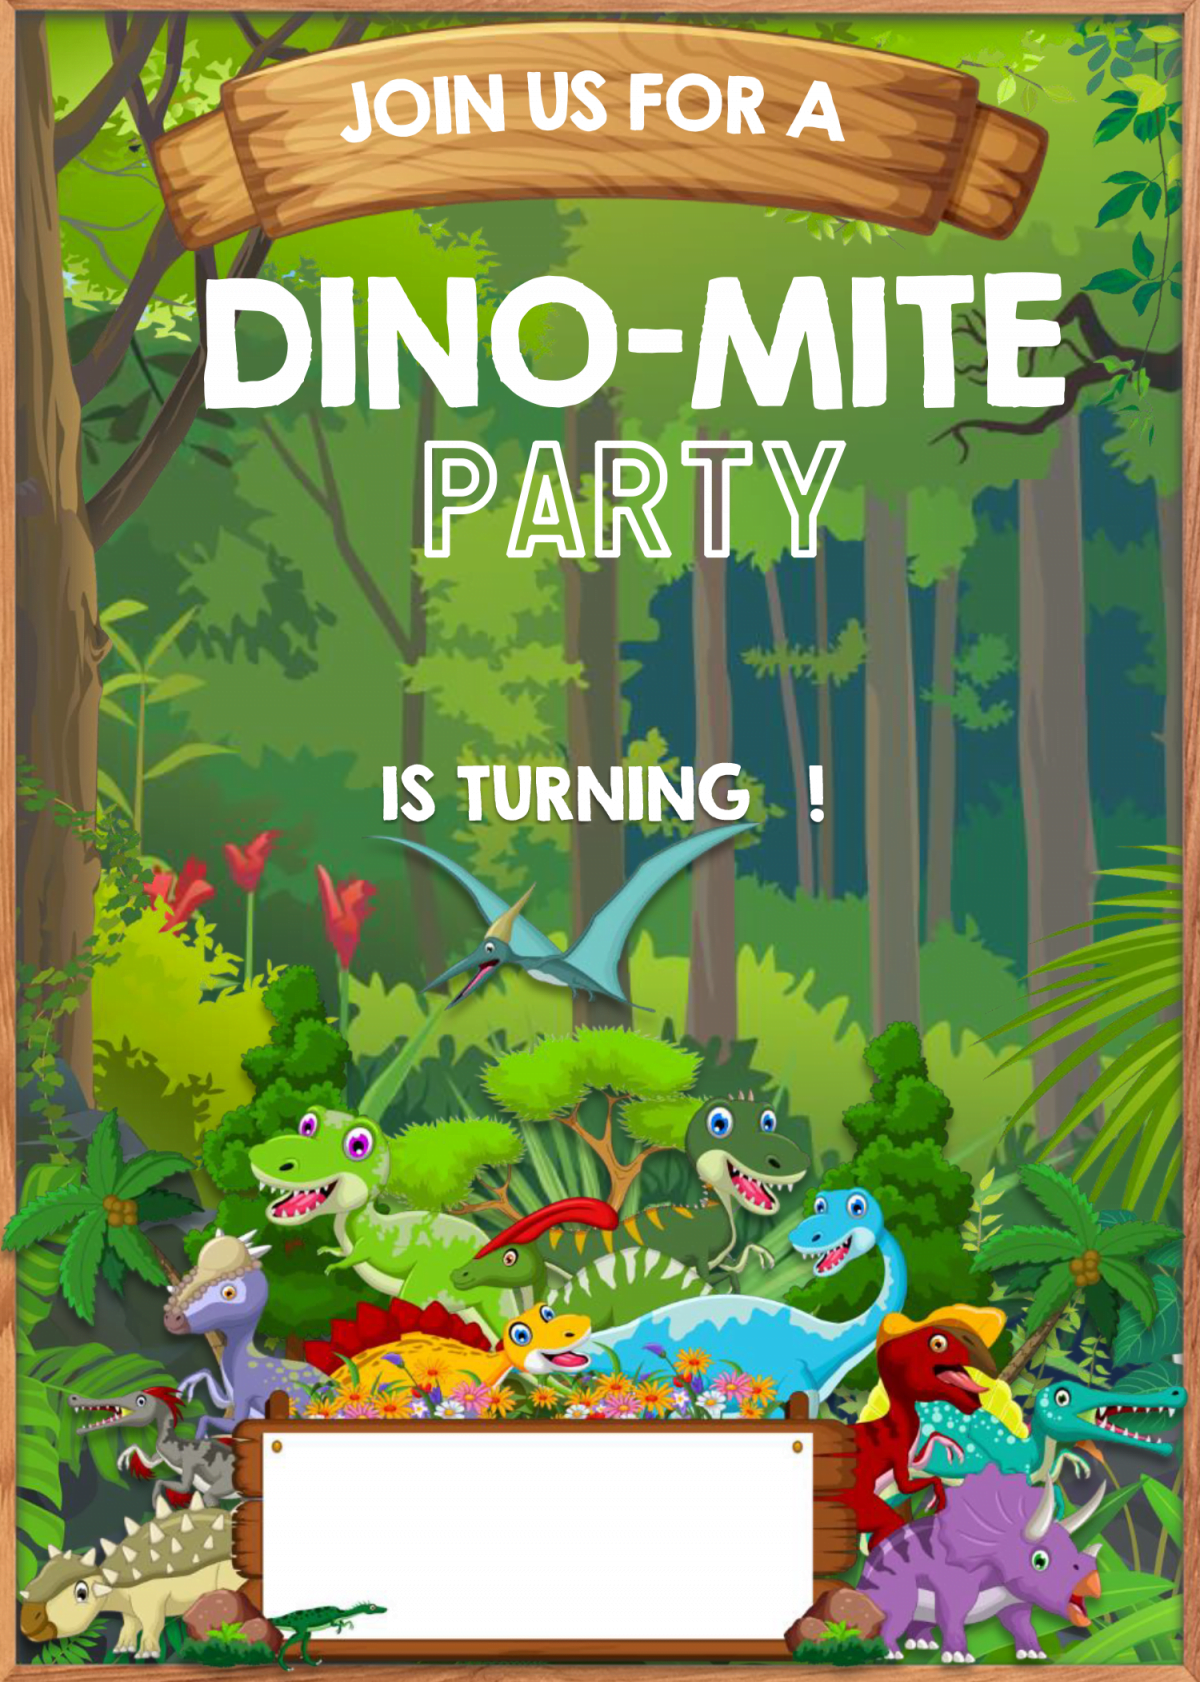 Dinosaur Invitation Templates - Editable With MS Word and has cute t-rex and ankylosaurus